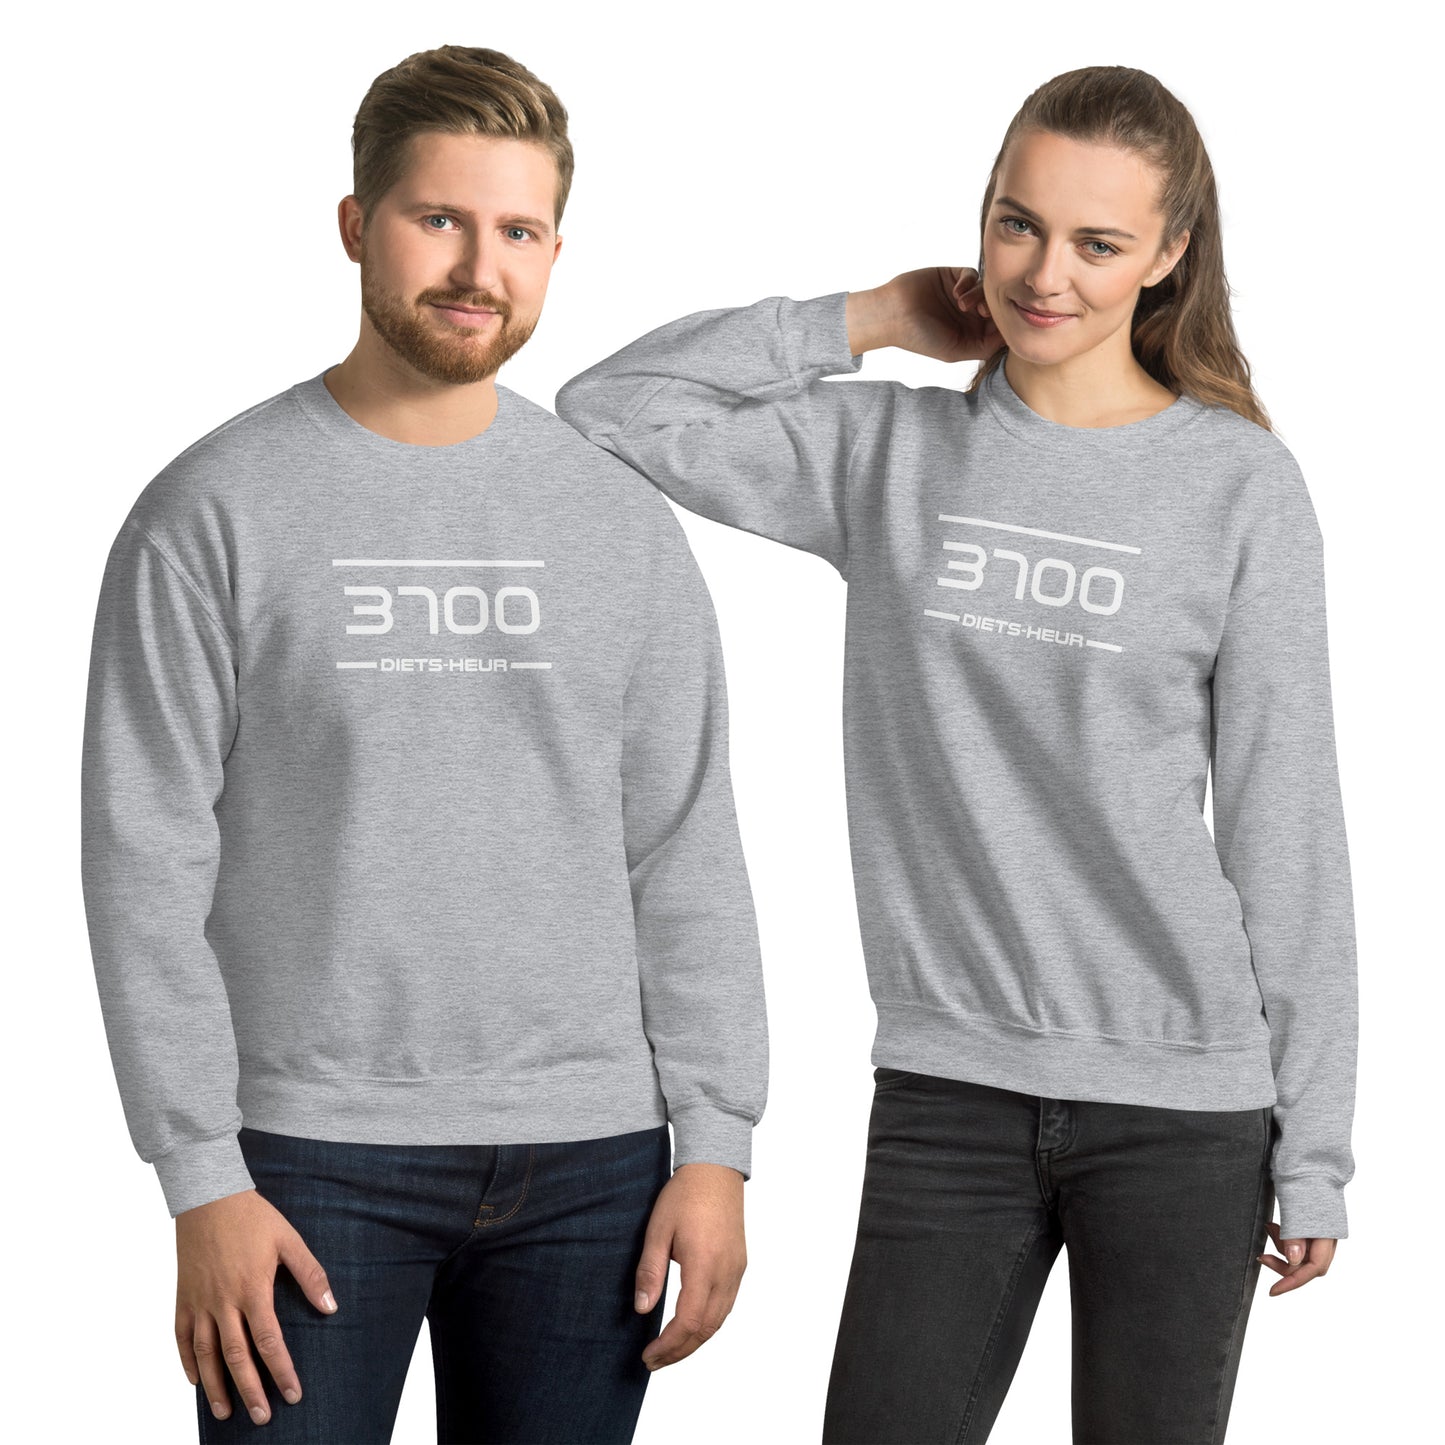 Sweater - 3700 - Diets-Heur (M/V)